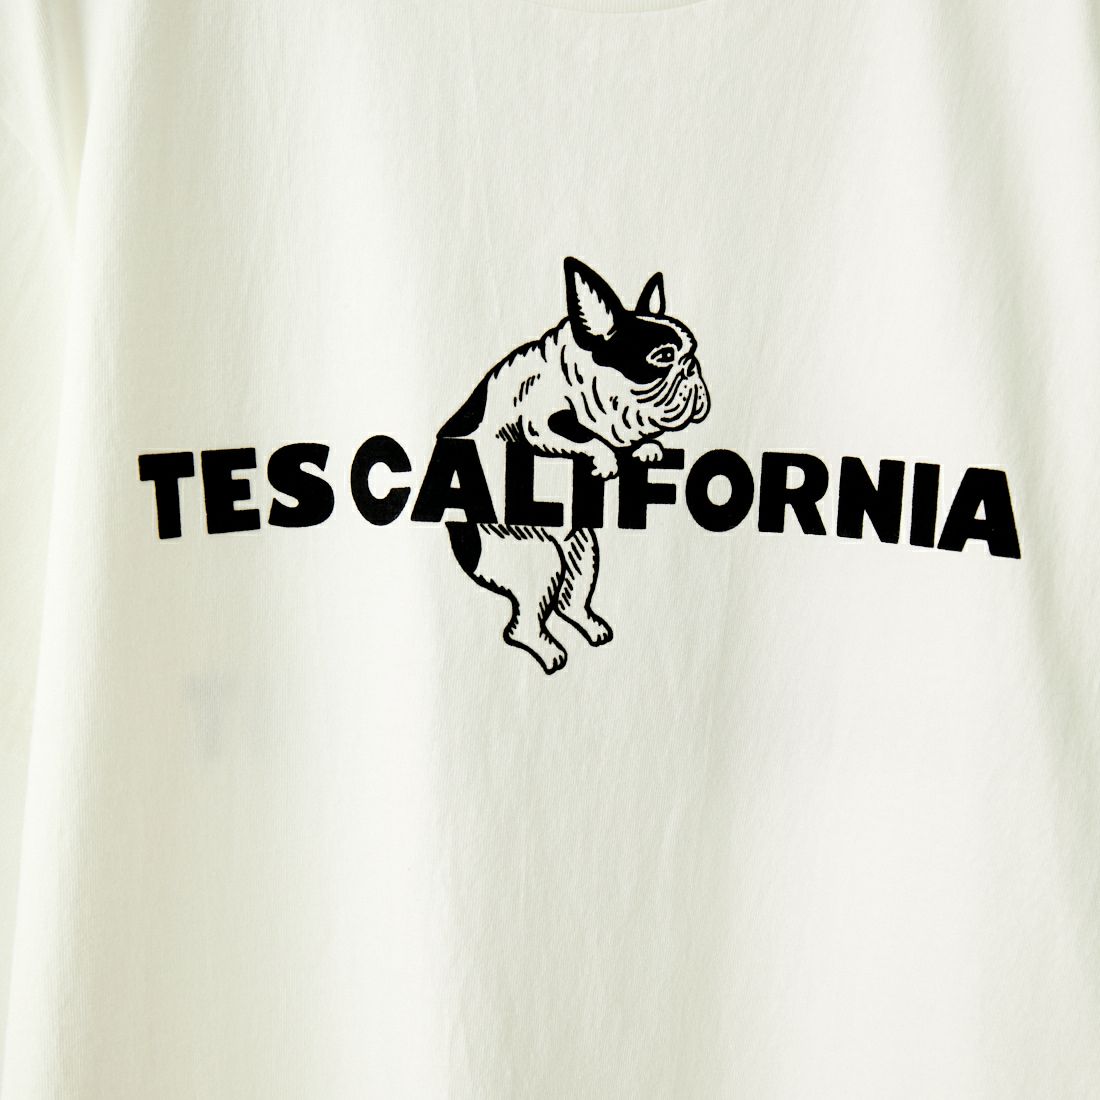 The Endless Summer [エンドレスサマー] カリフォルニアフロッキーロゴTシャツ [FH-24574361]